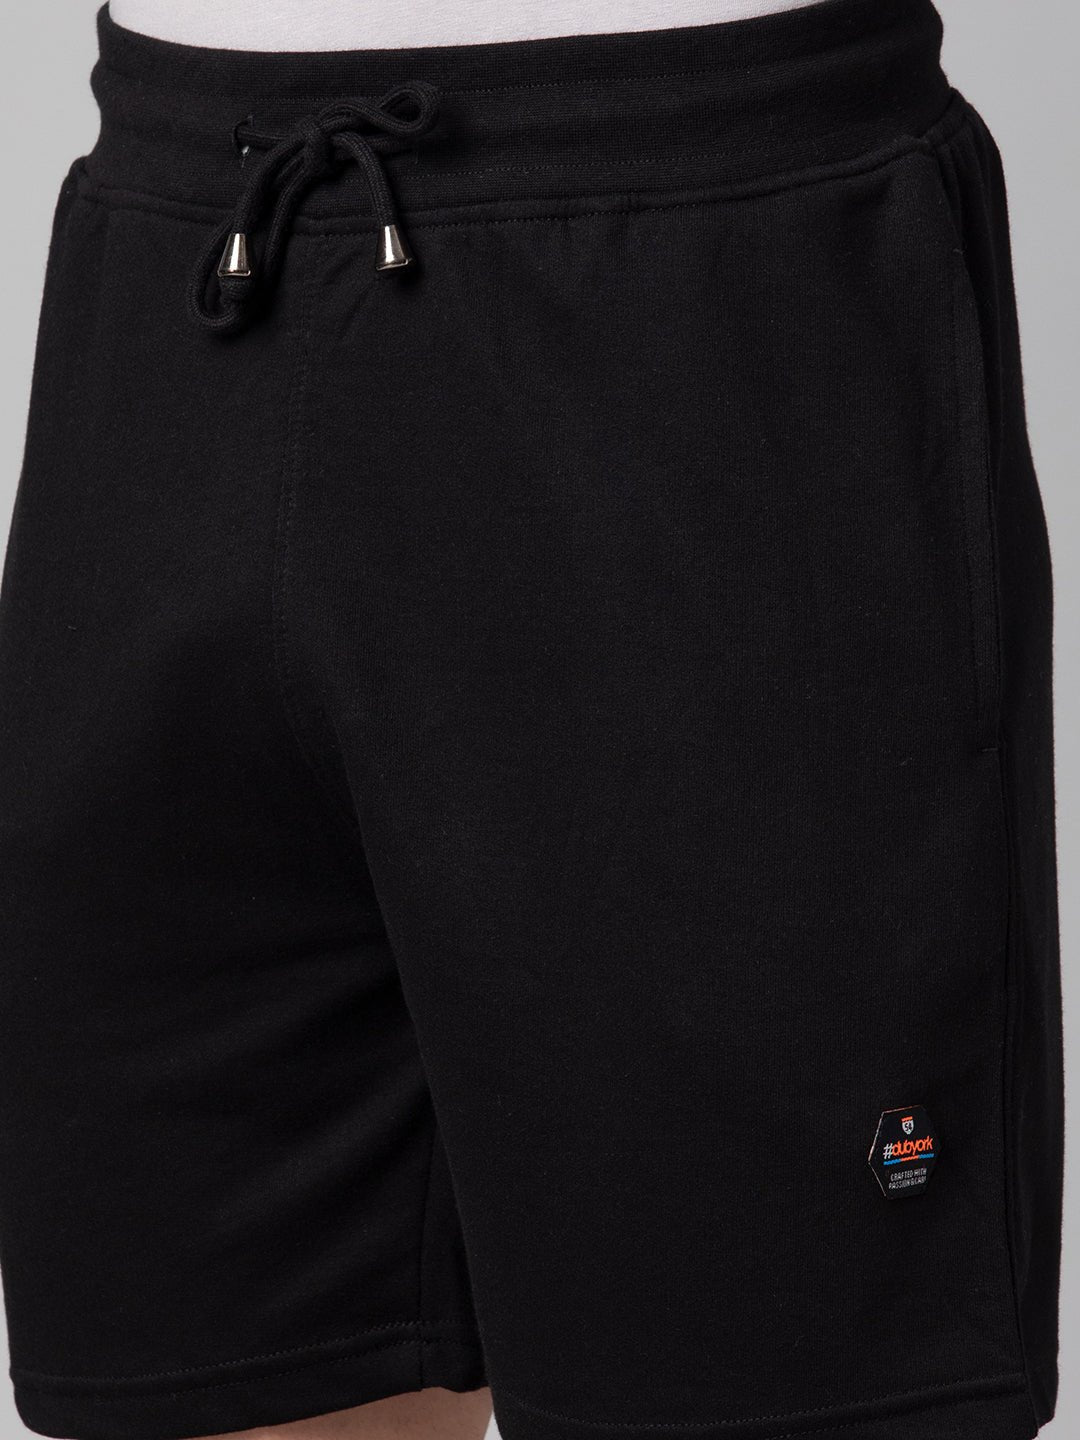 Black Shorts - clubyork